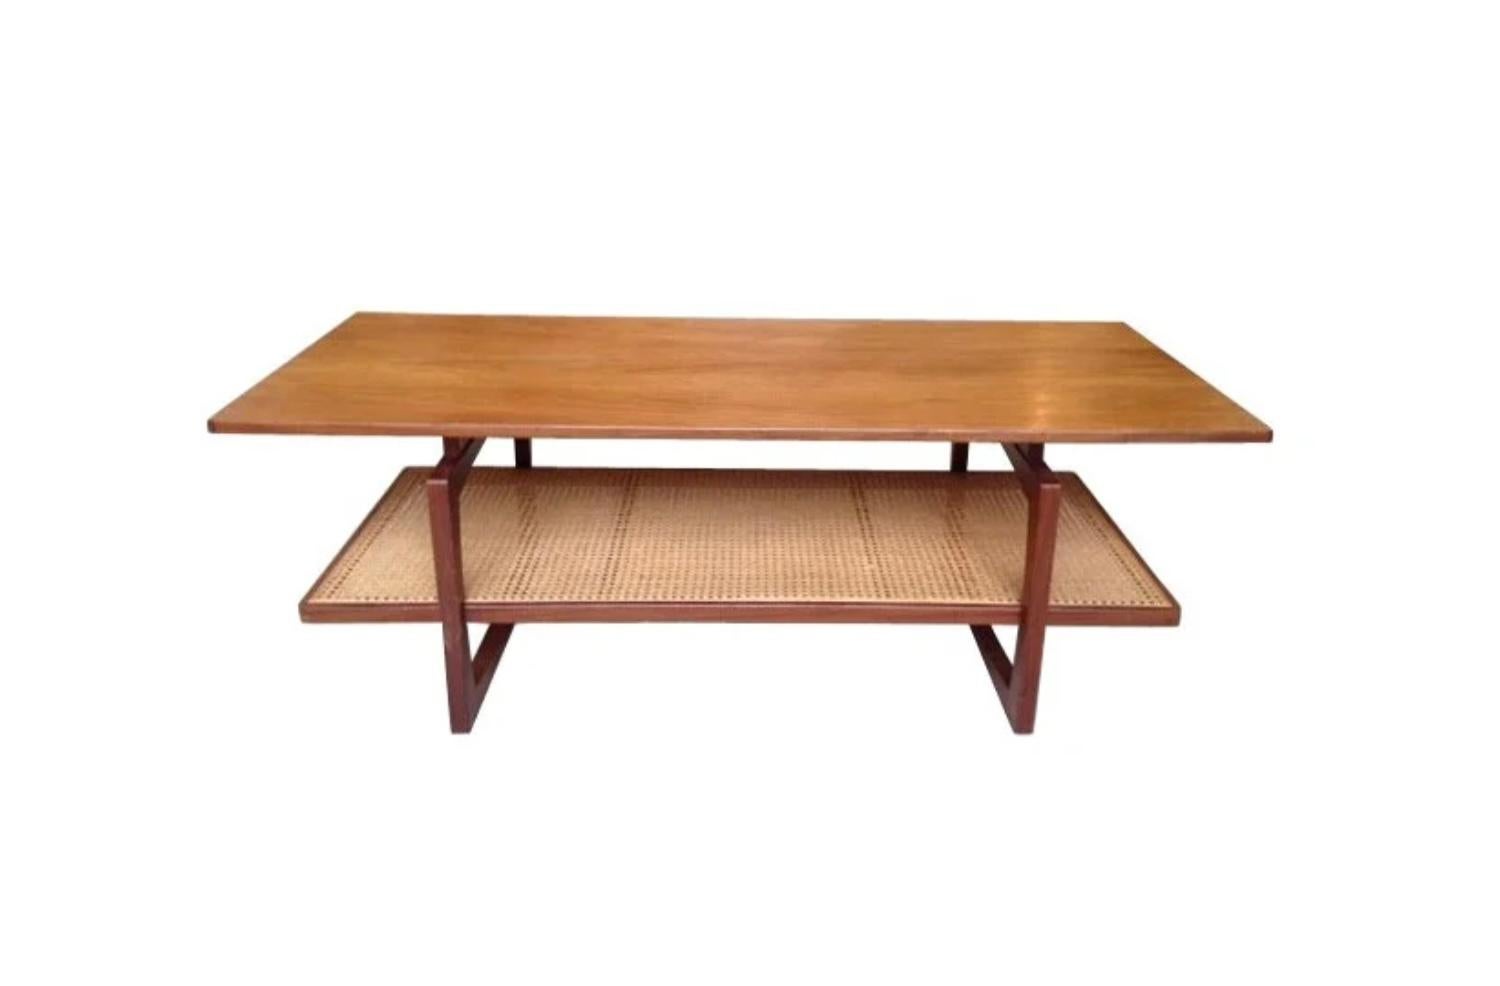 British 1960’s Gplan coffee table by RA Bird